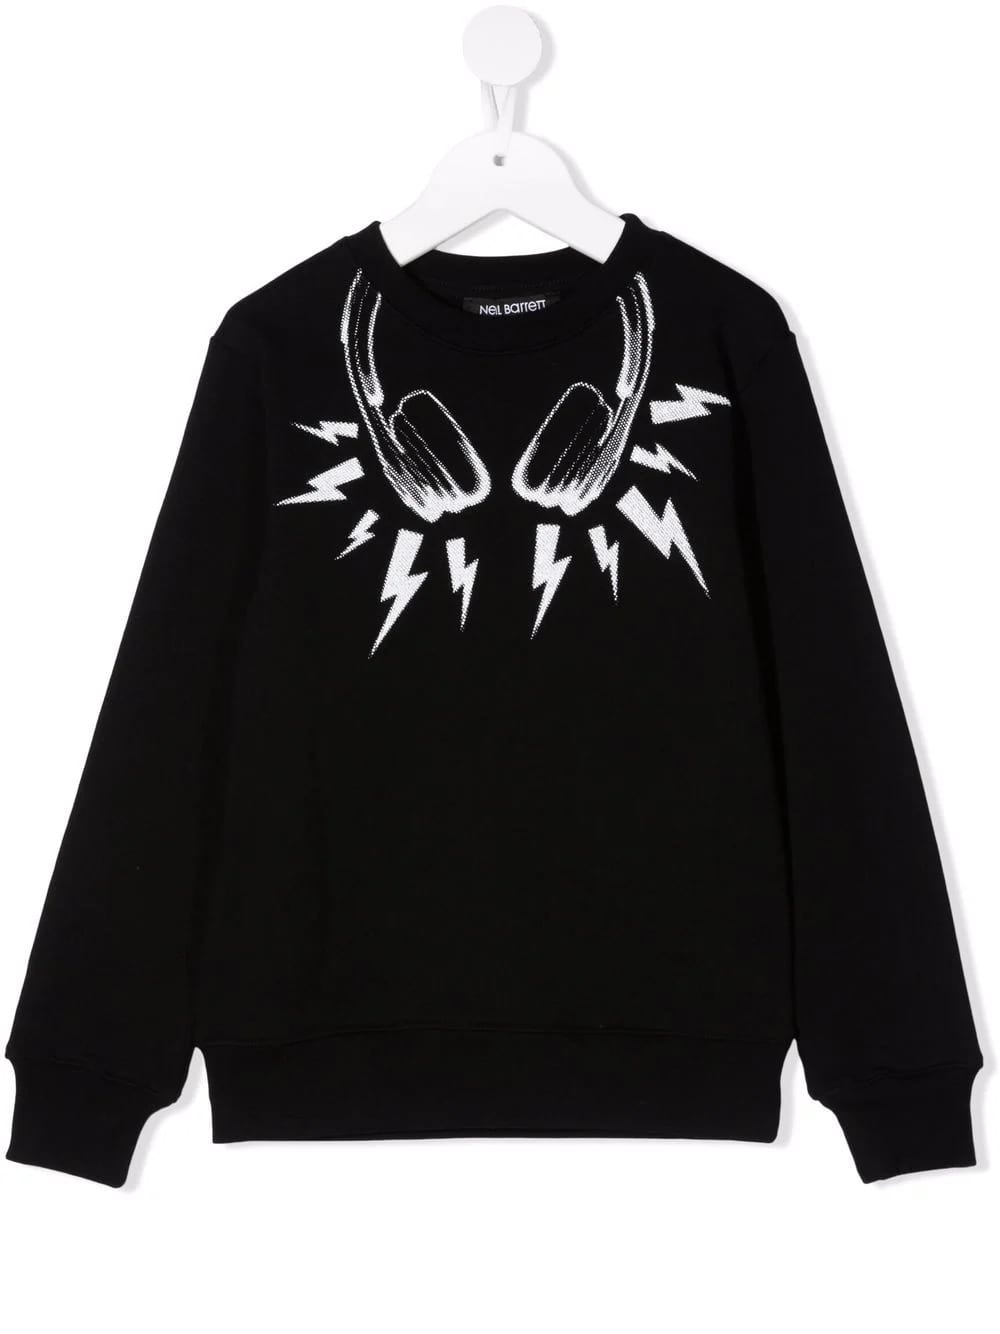 Neil Barrett Kids Black Sweatshirt With Thunderbolt Headphone Print